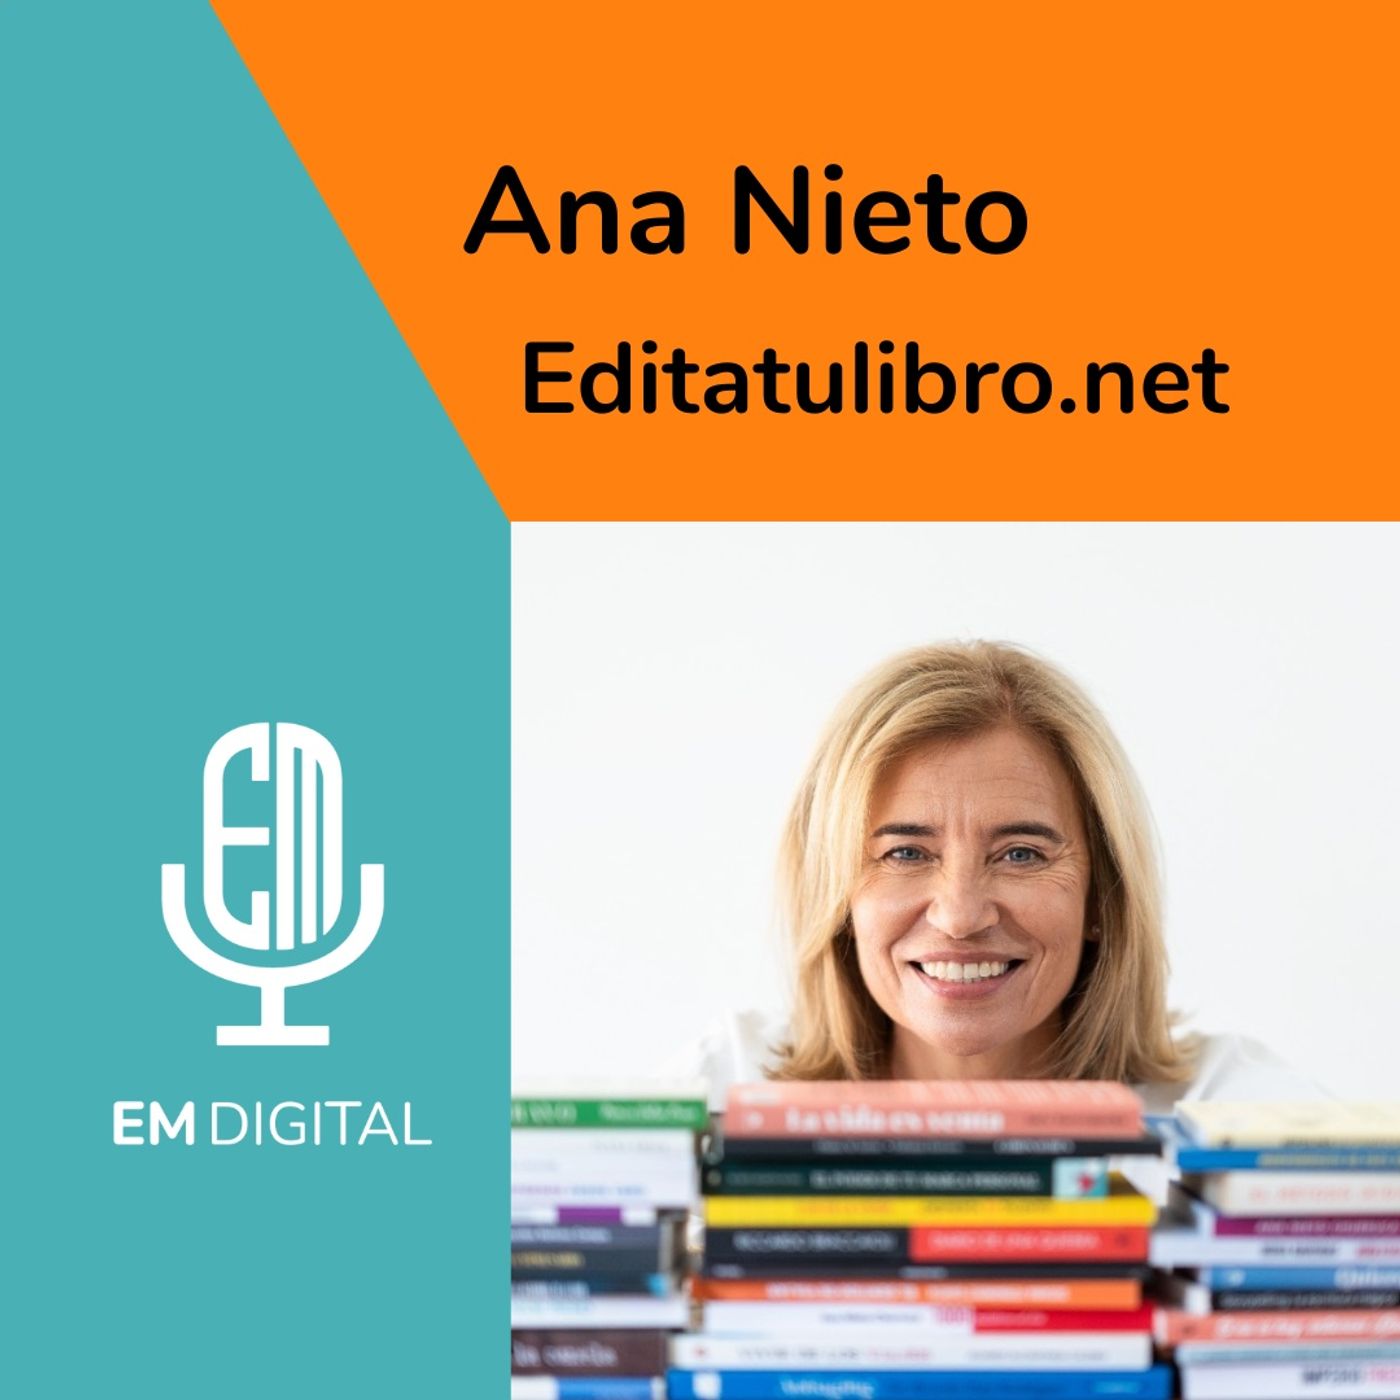 Ana Nieto: Editatulibro.net